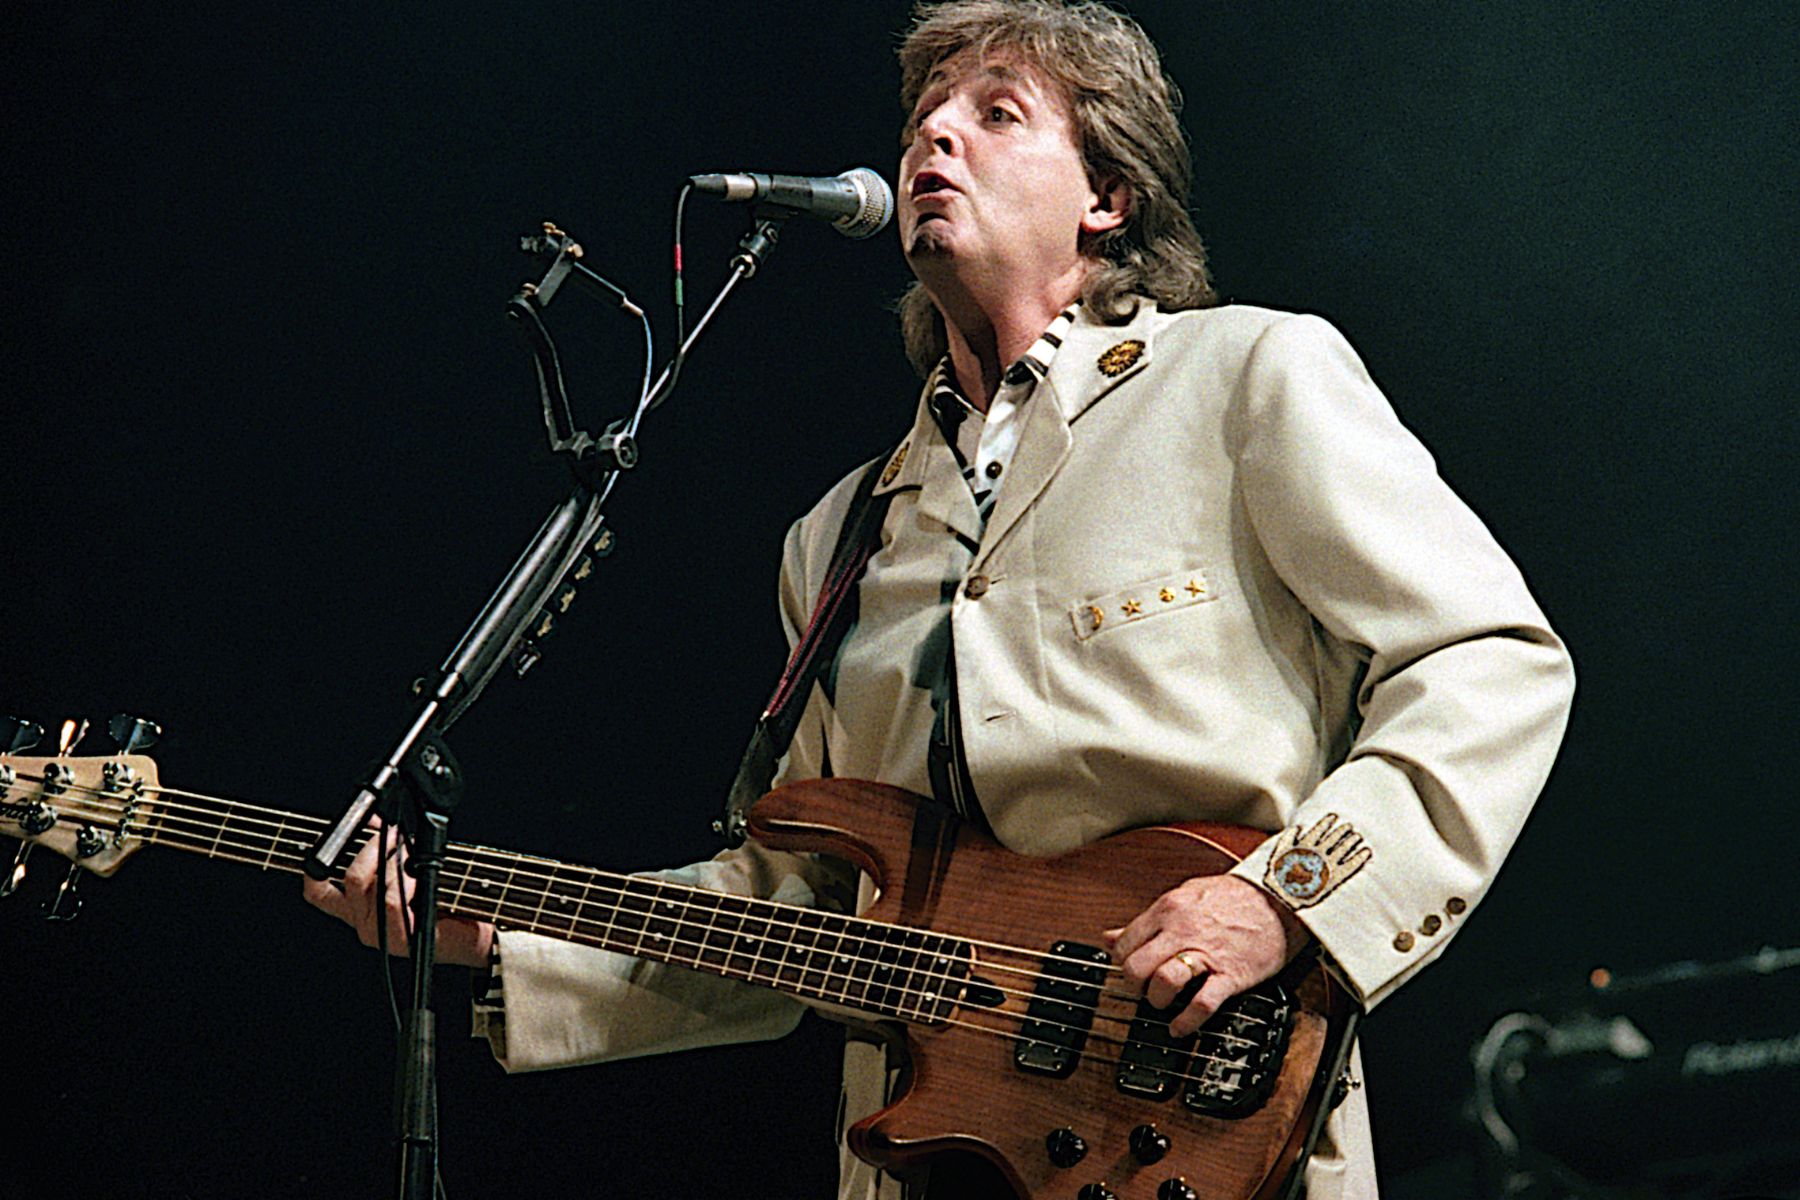 "Paul McCartney," Hey Jude